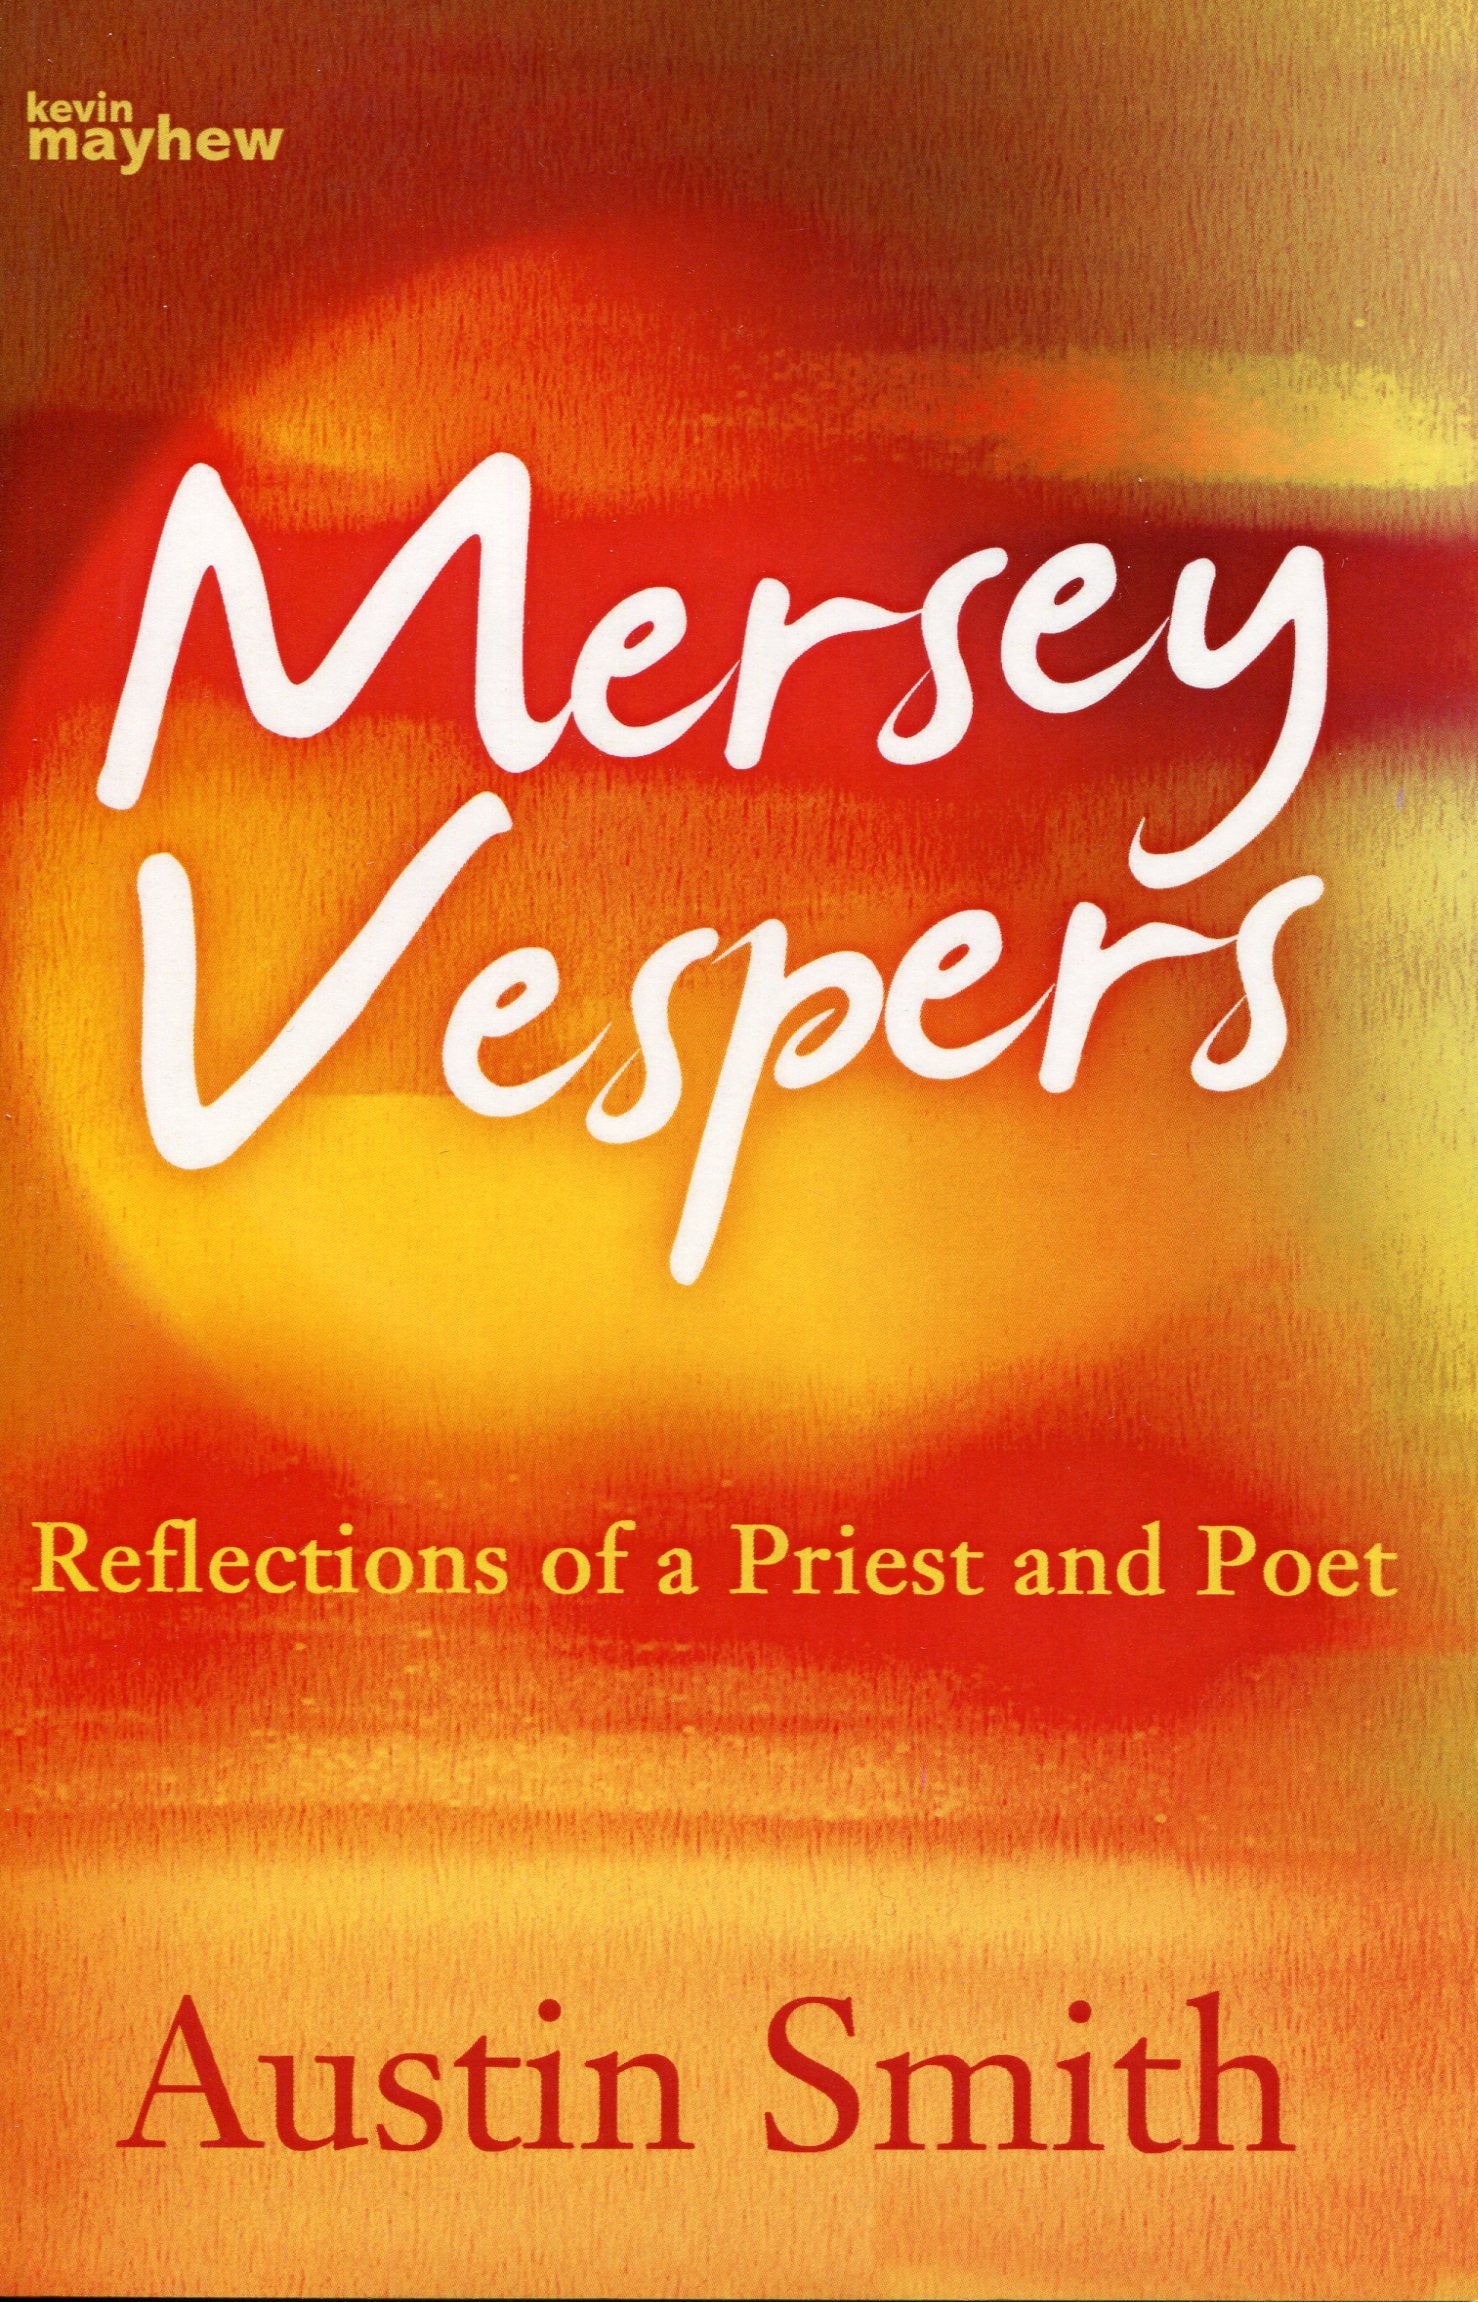 Image of Mersey Vespers other